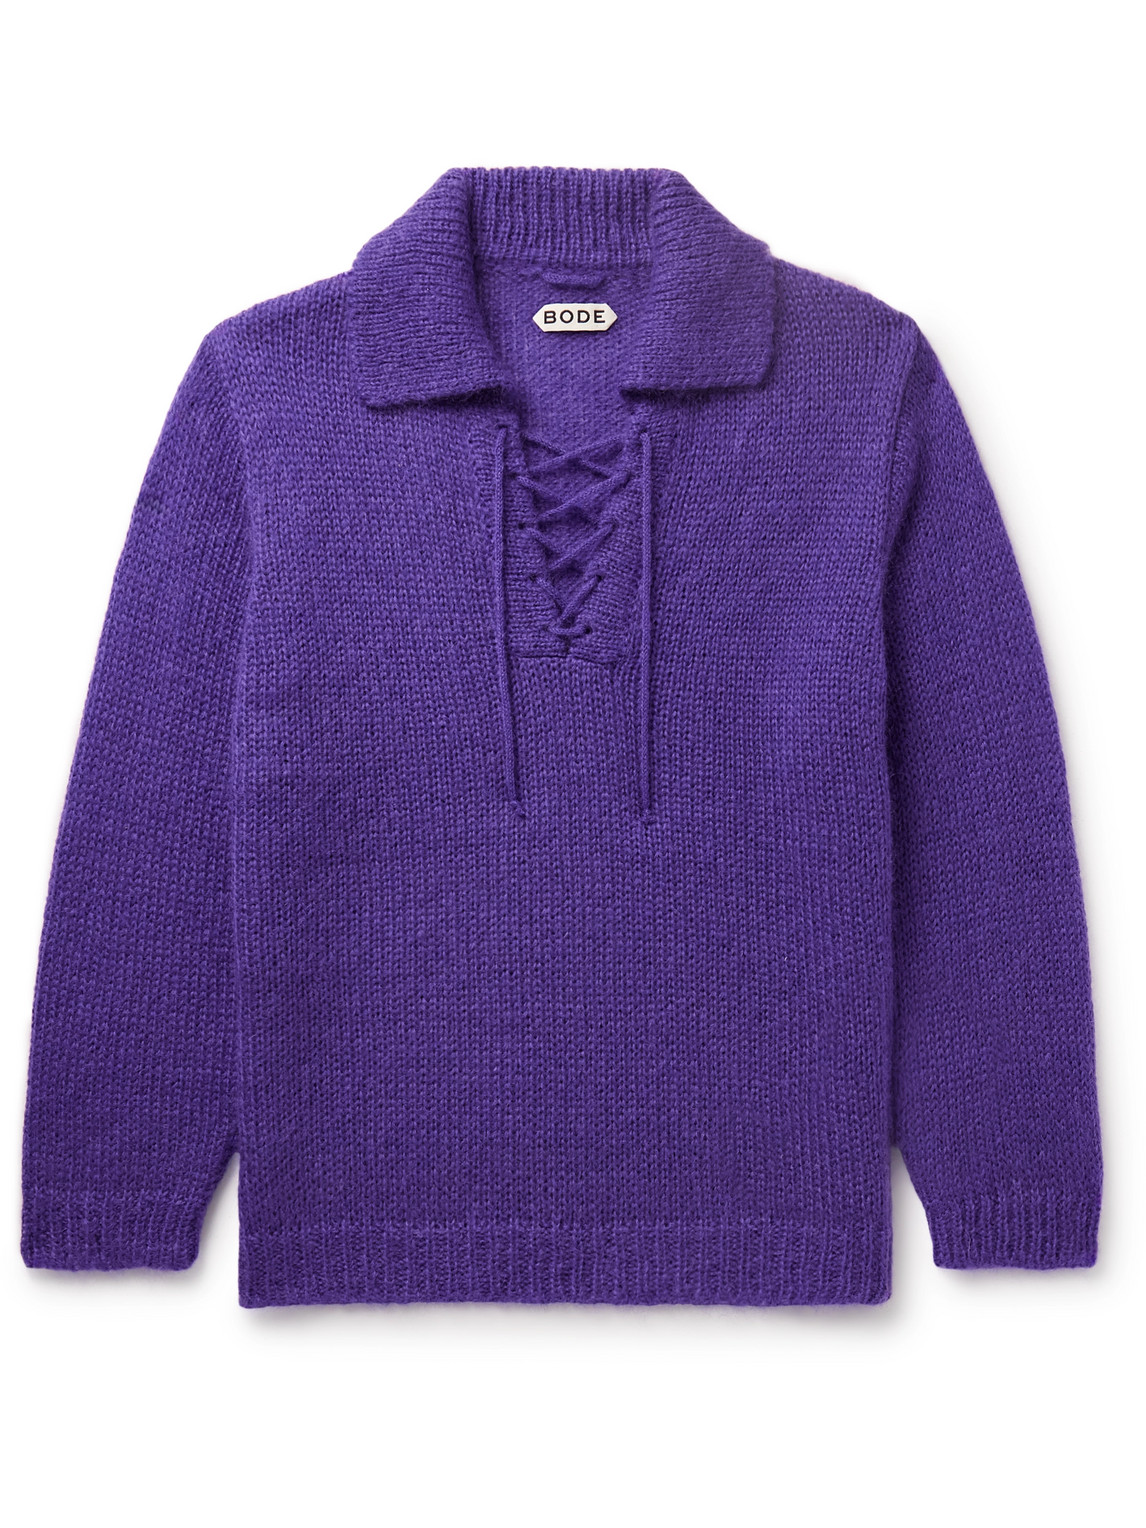 Bode Alpine Pullover Sweater In Purple